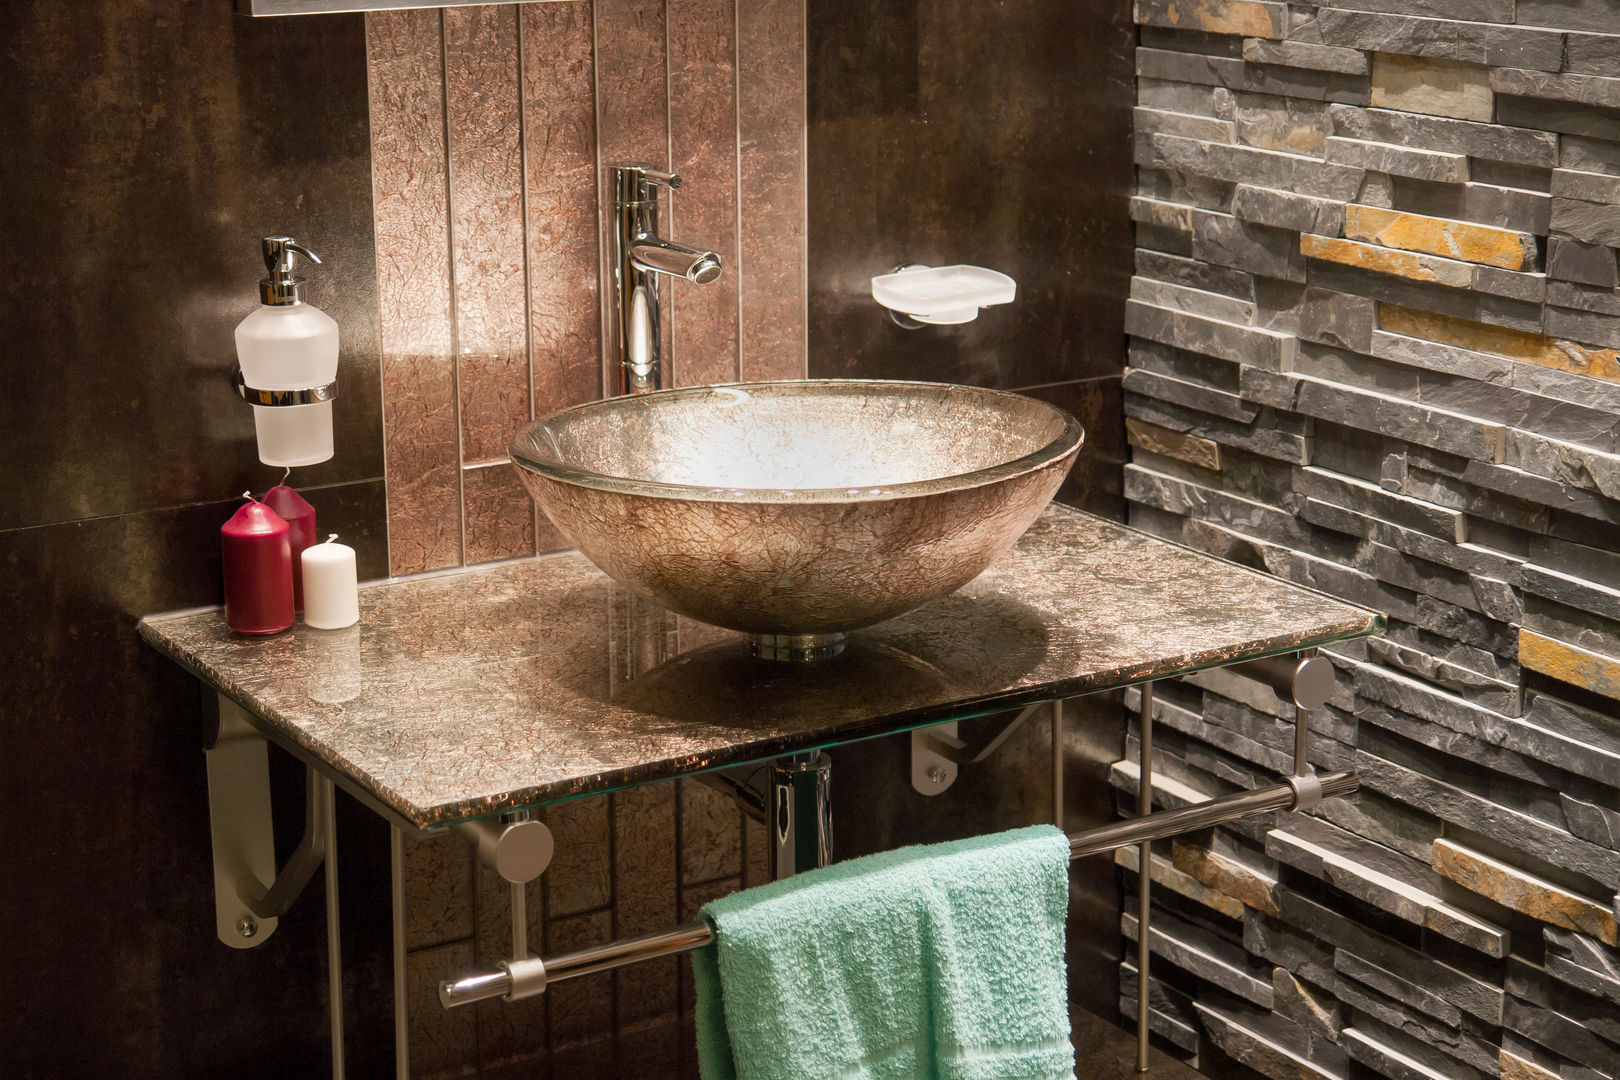 Exposed Brick, Statement Sink Gracious Luxury Interiors Industrial style bathroom